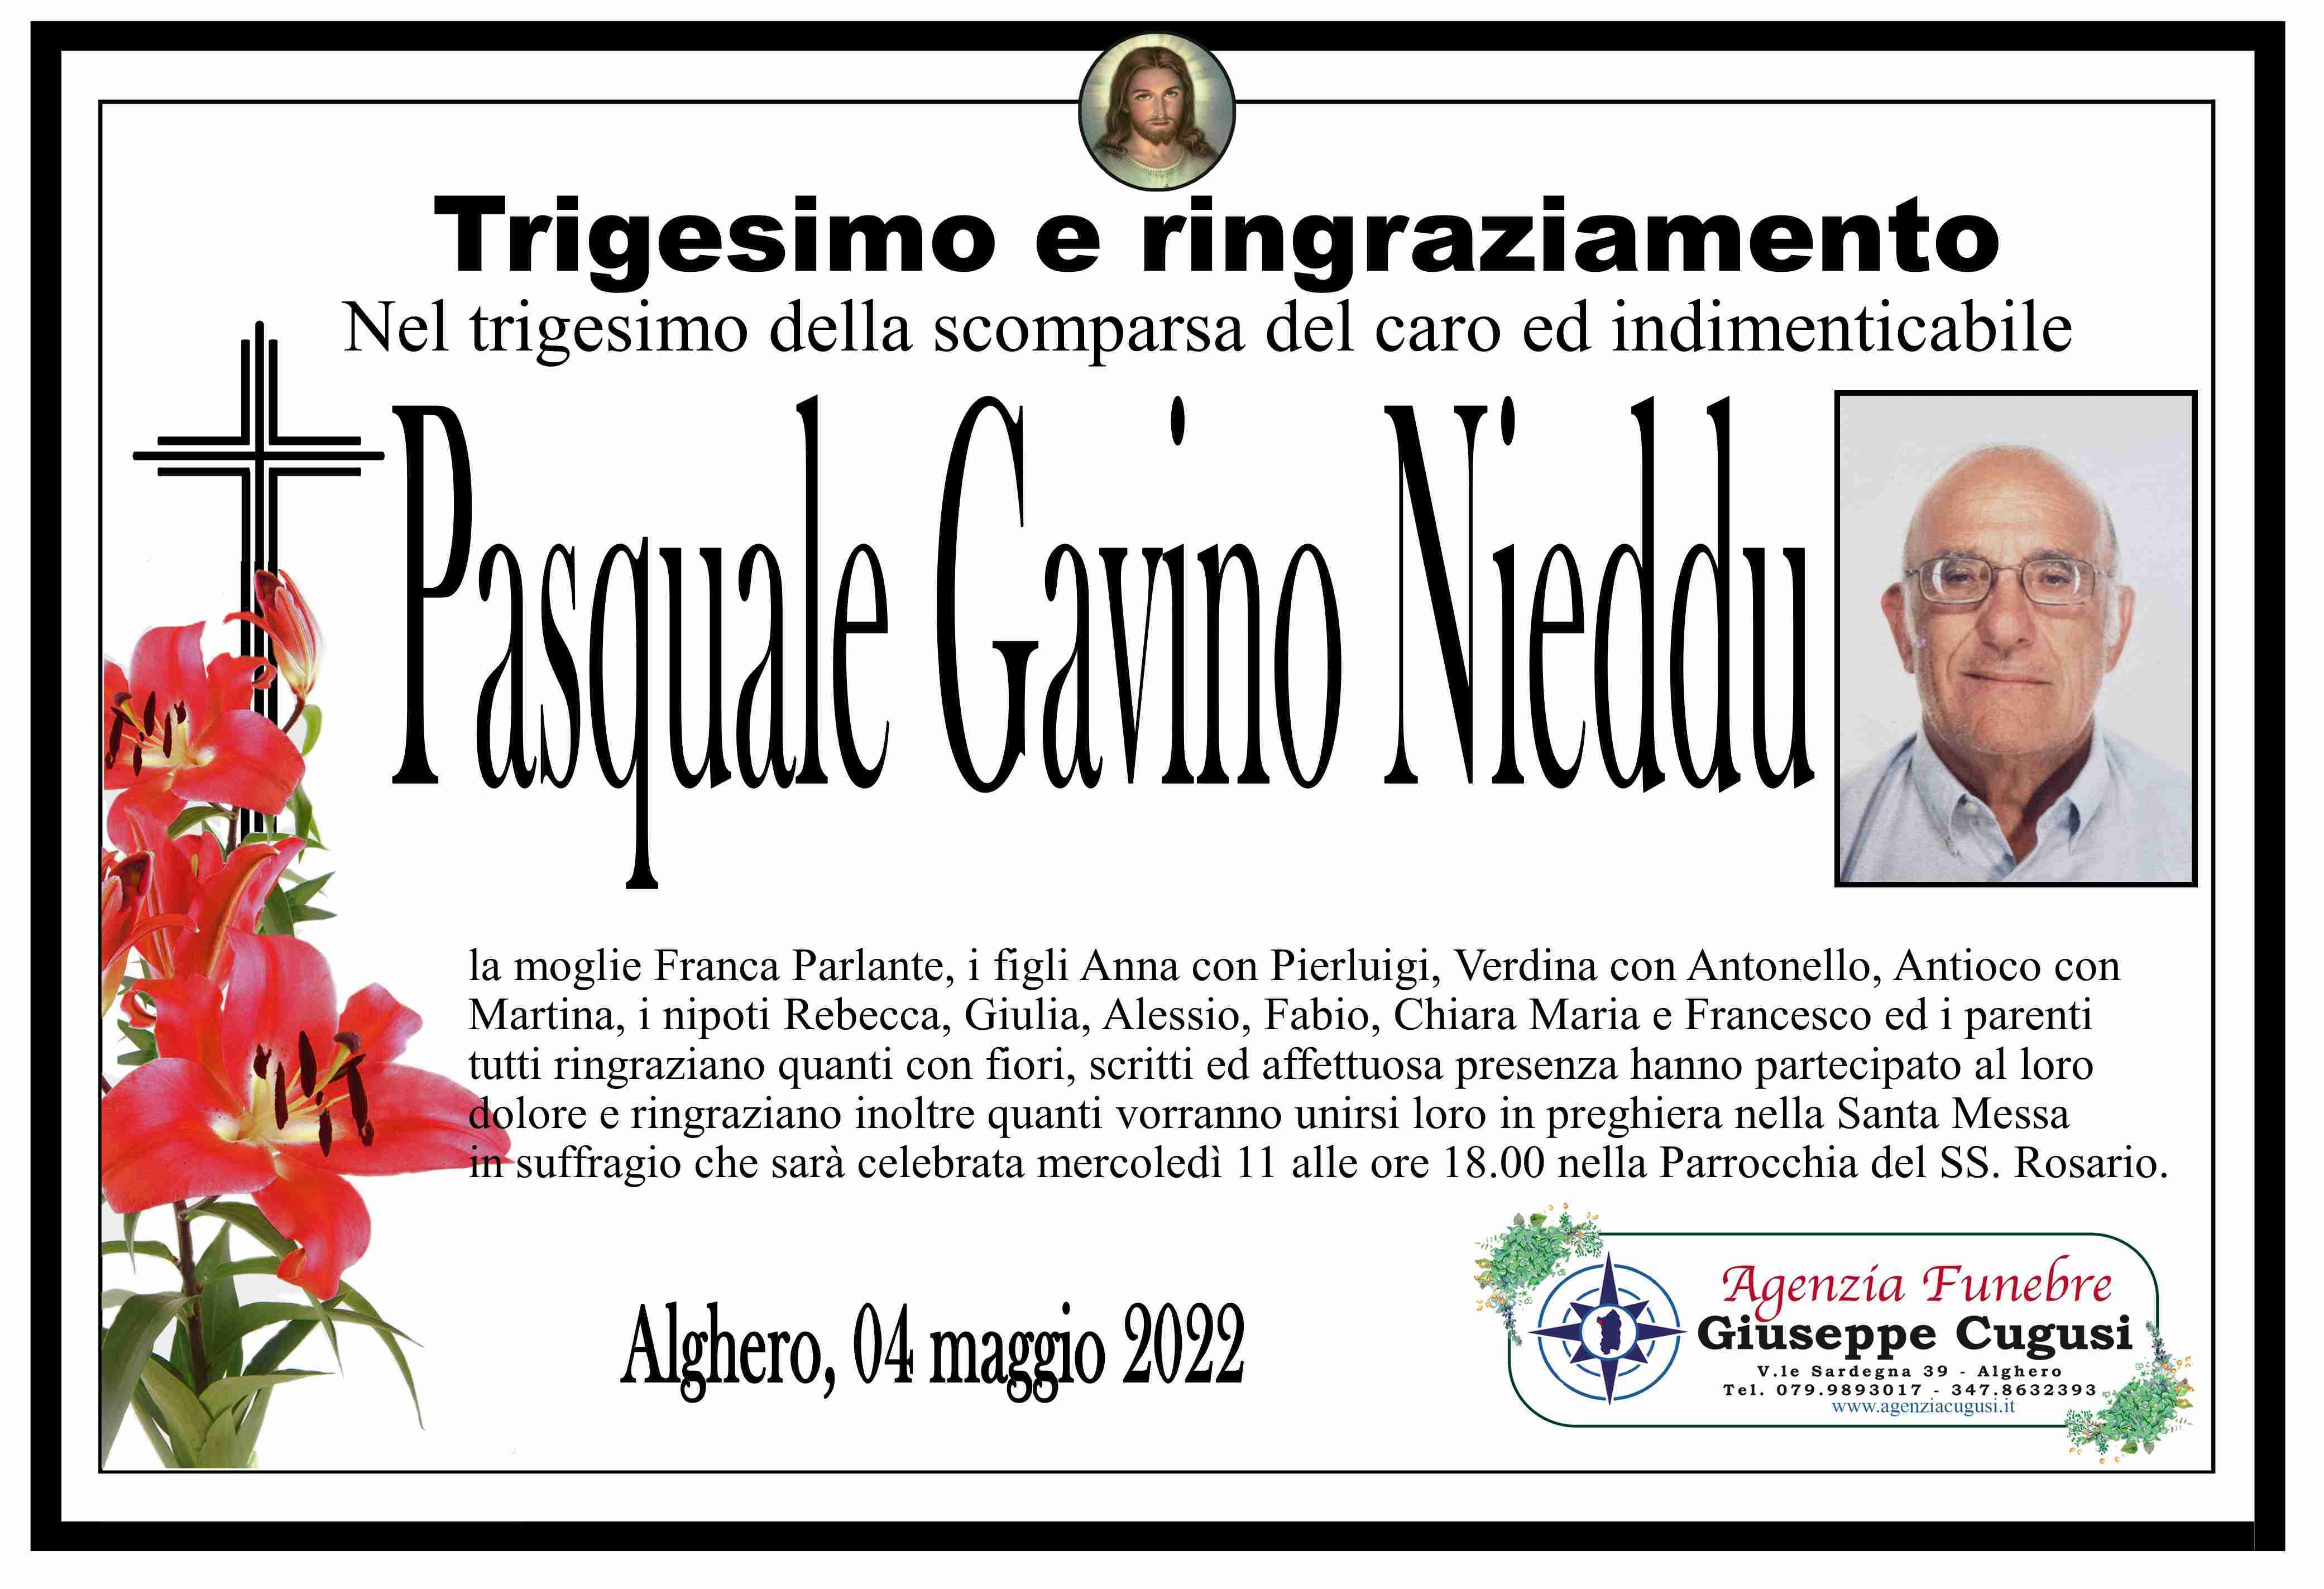 Pasquale Gavino Nieddu